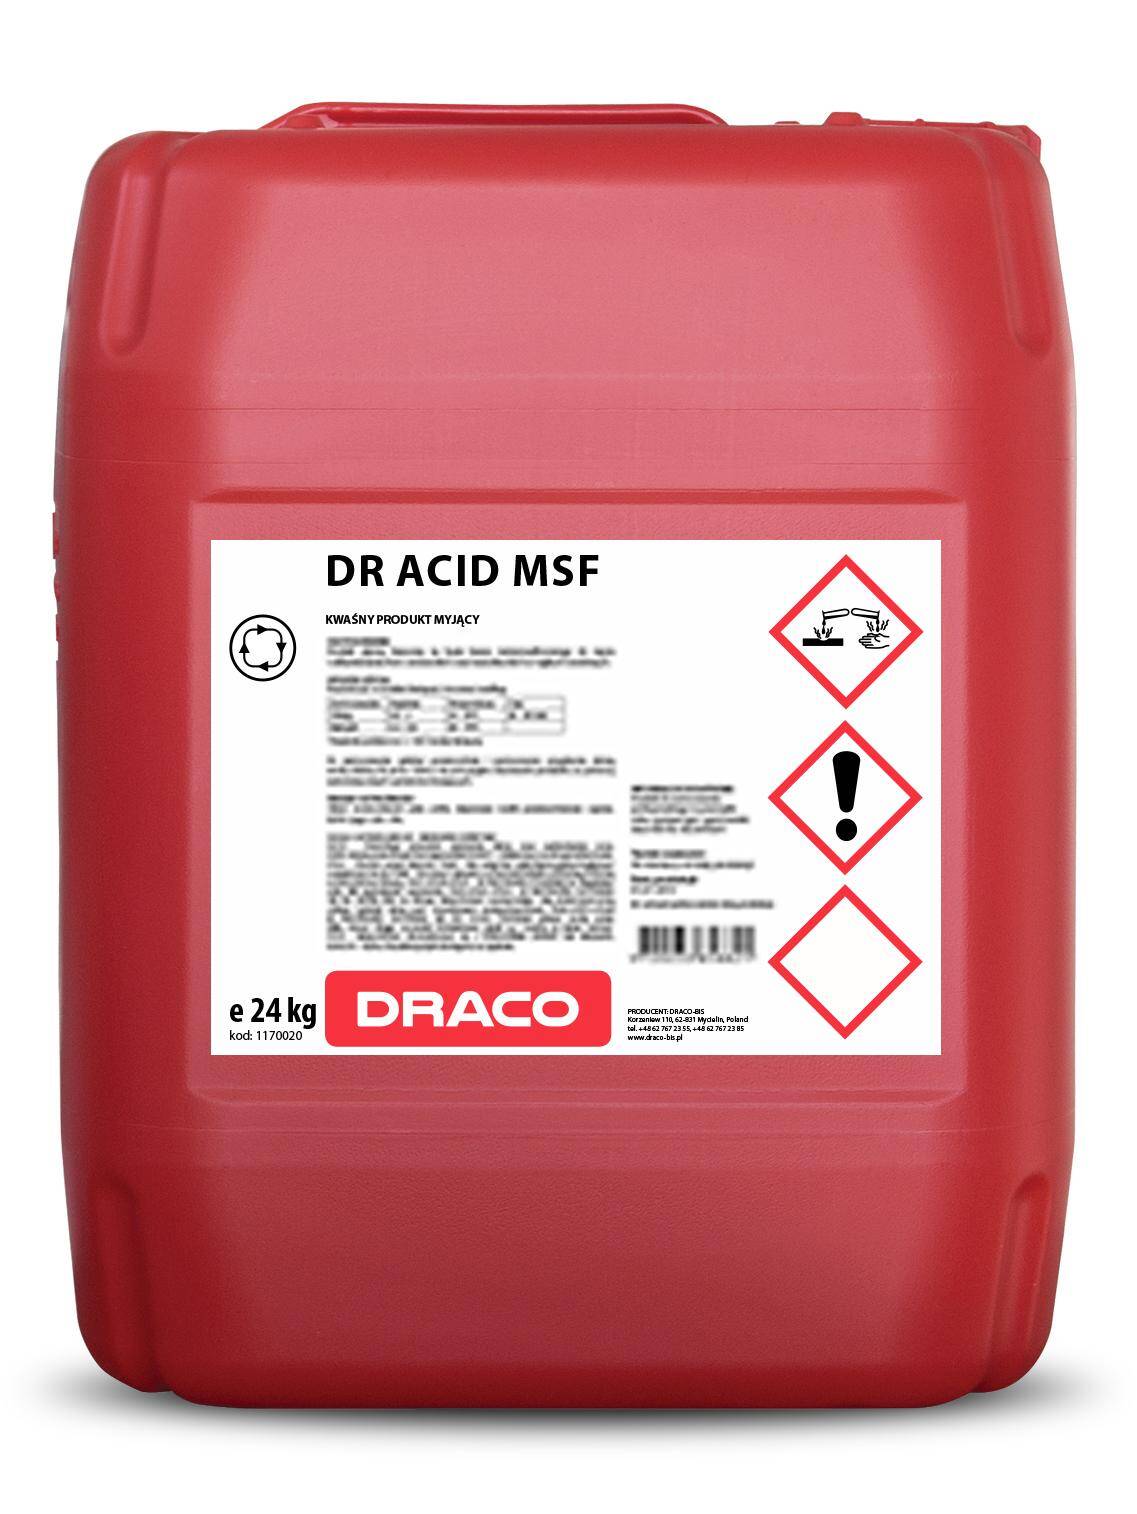 DRACO - DR ACID MSF  24kg